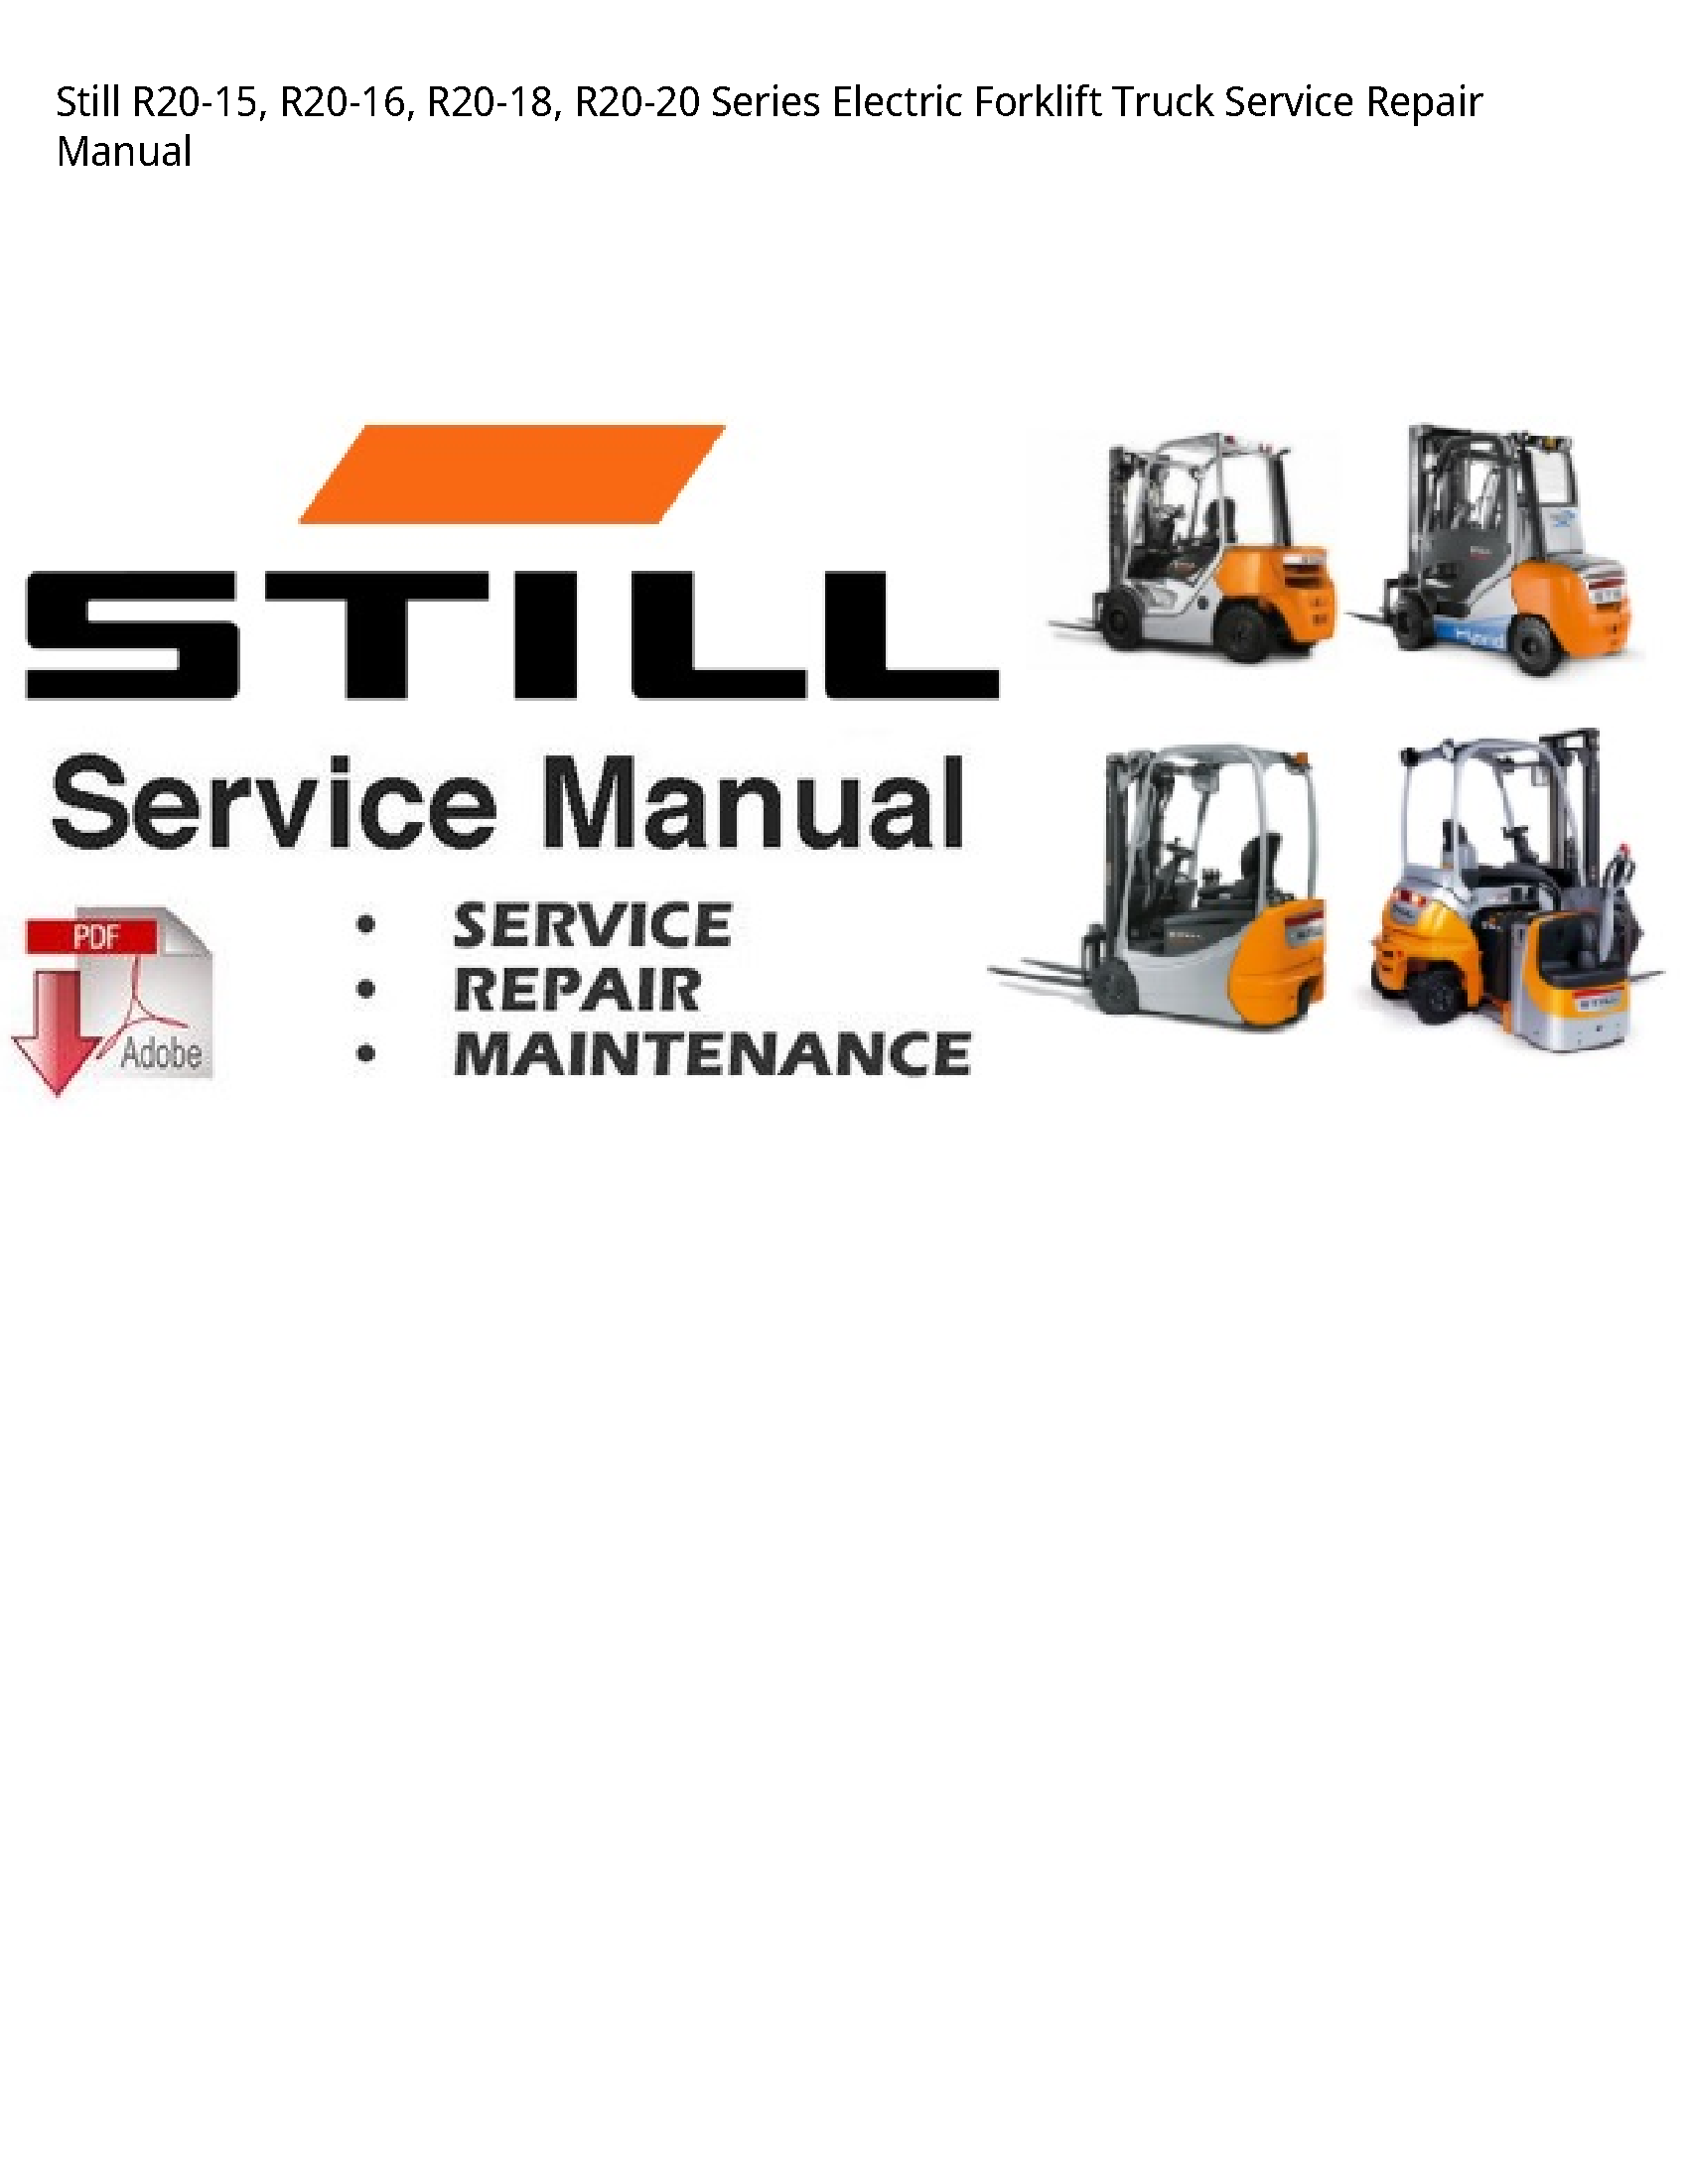 Still R20-15 Series Electric Forklift Truck manual